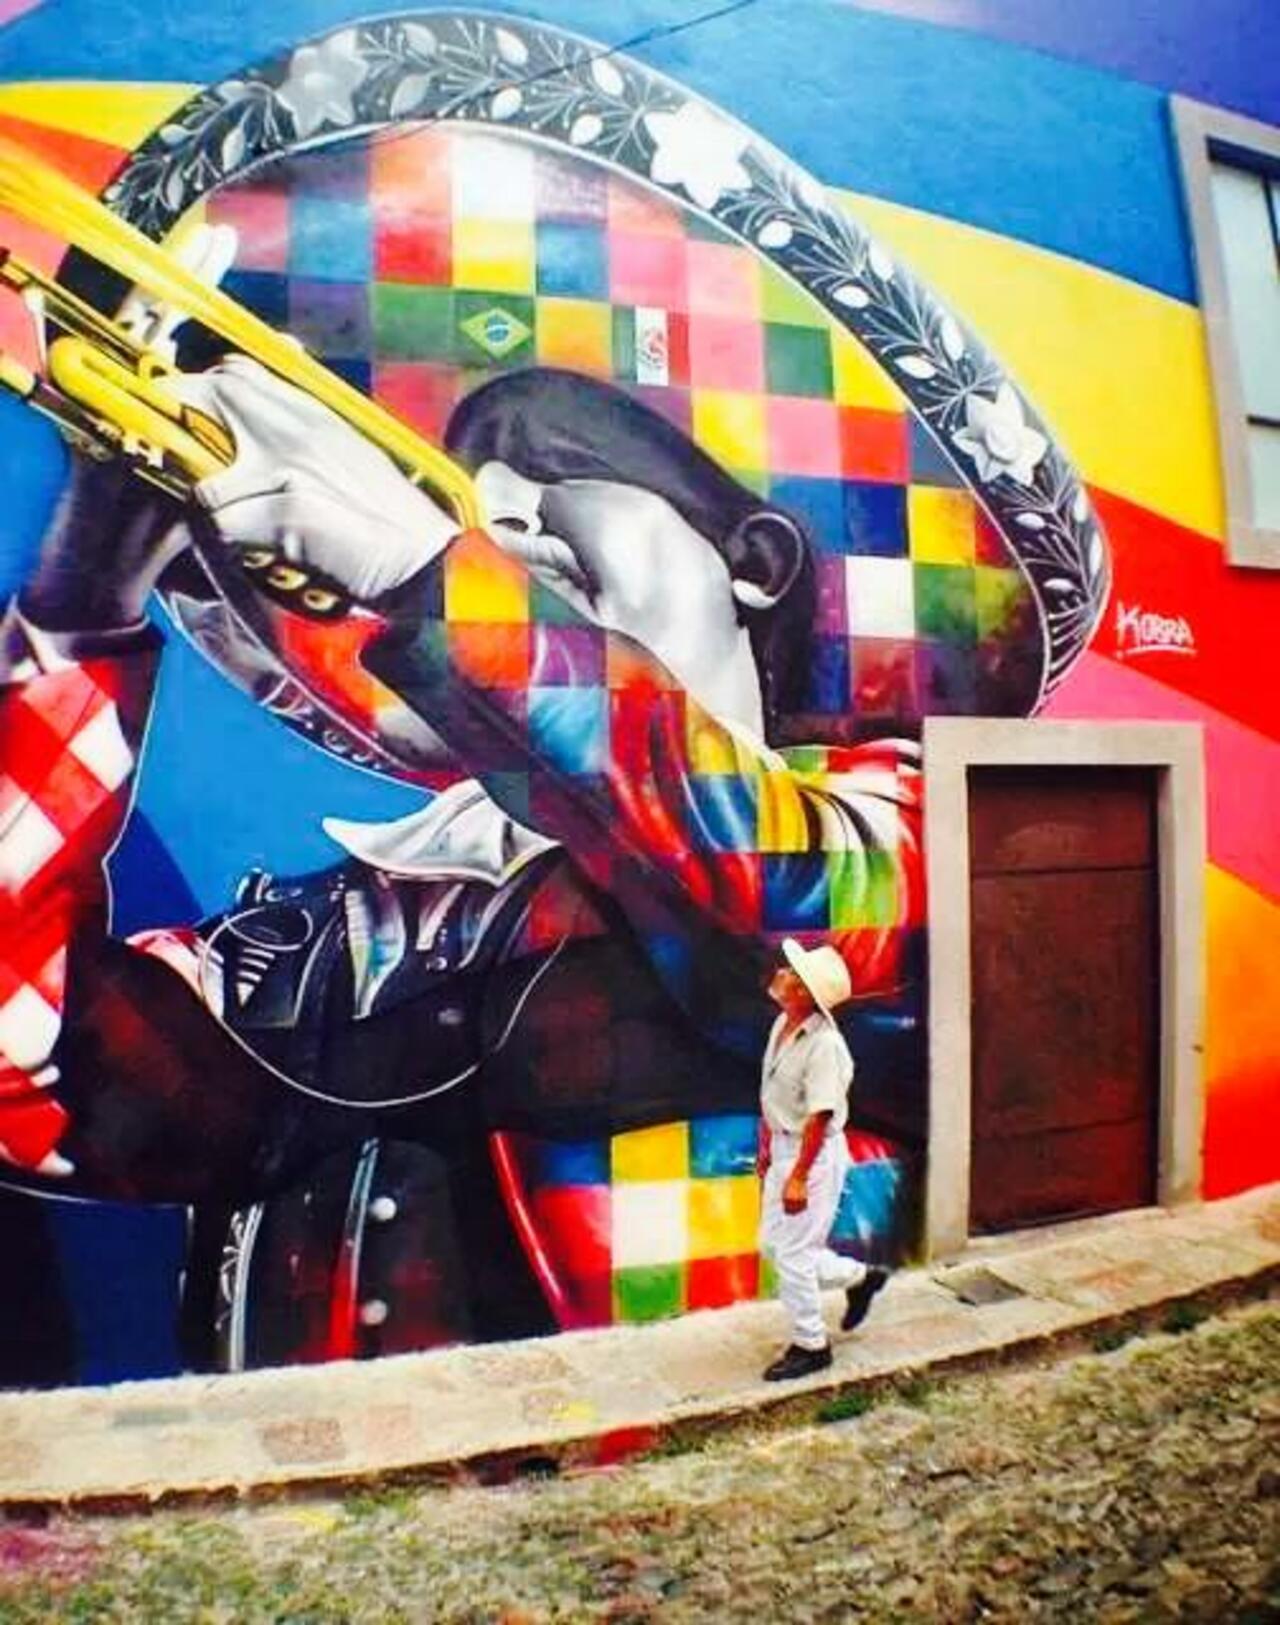 Kobra #streetart #stencil #graffiti #mural #murales #urbanart http://t.co/QUe52wKMrF